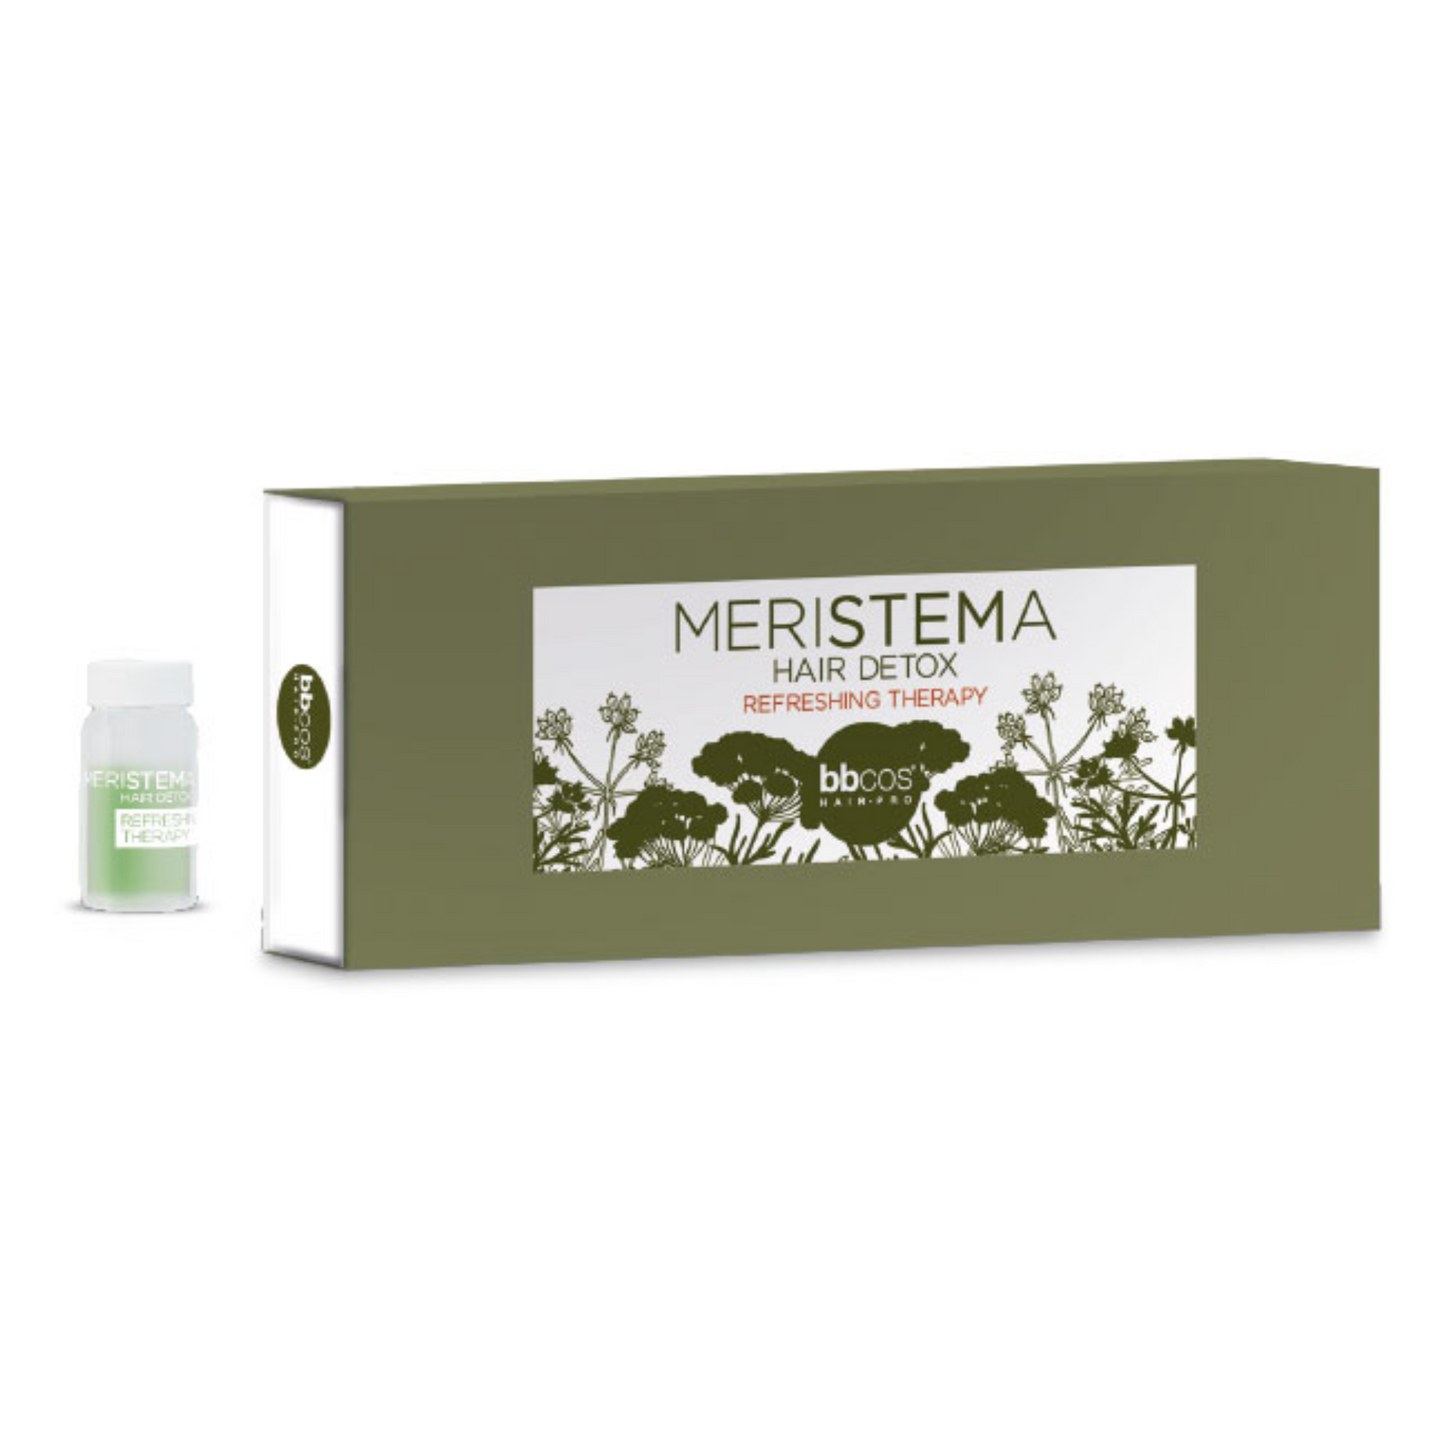 BBCOS Meristema Refreshing Therapy Vials Box (6 x 6 ML Vials)